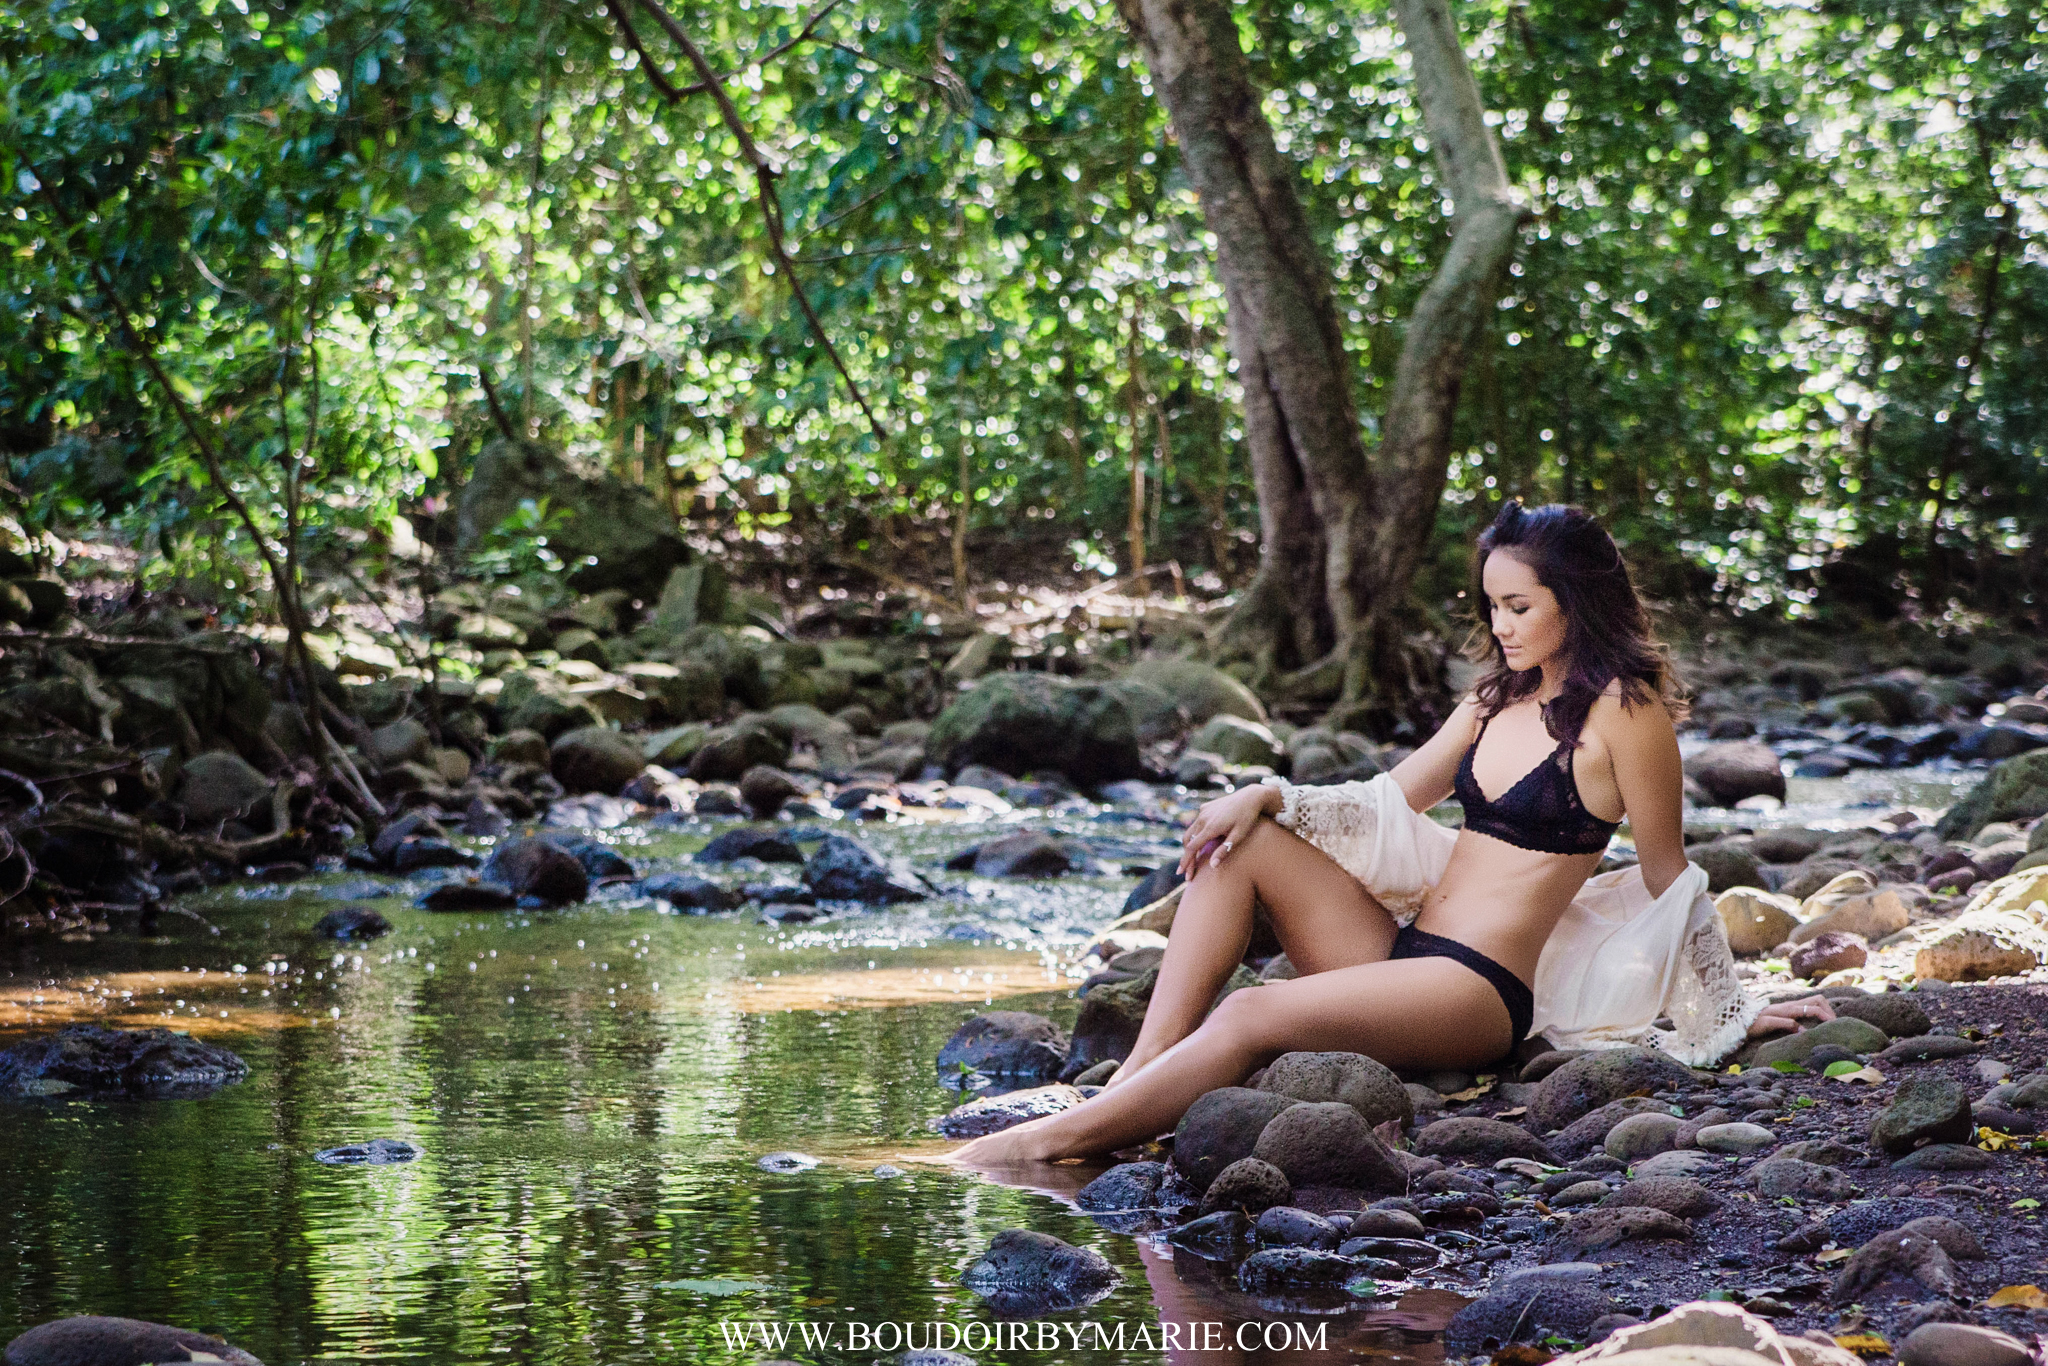 An Outdoor Boudoir Shoot in Maui - International Boudoir Photographer: Boud...